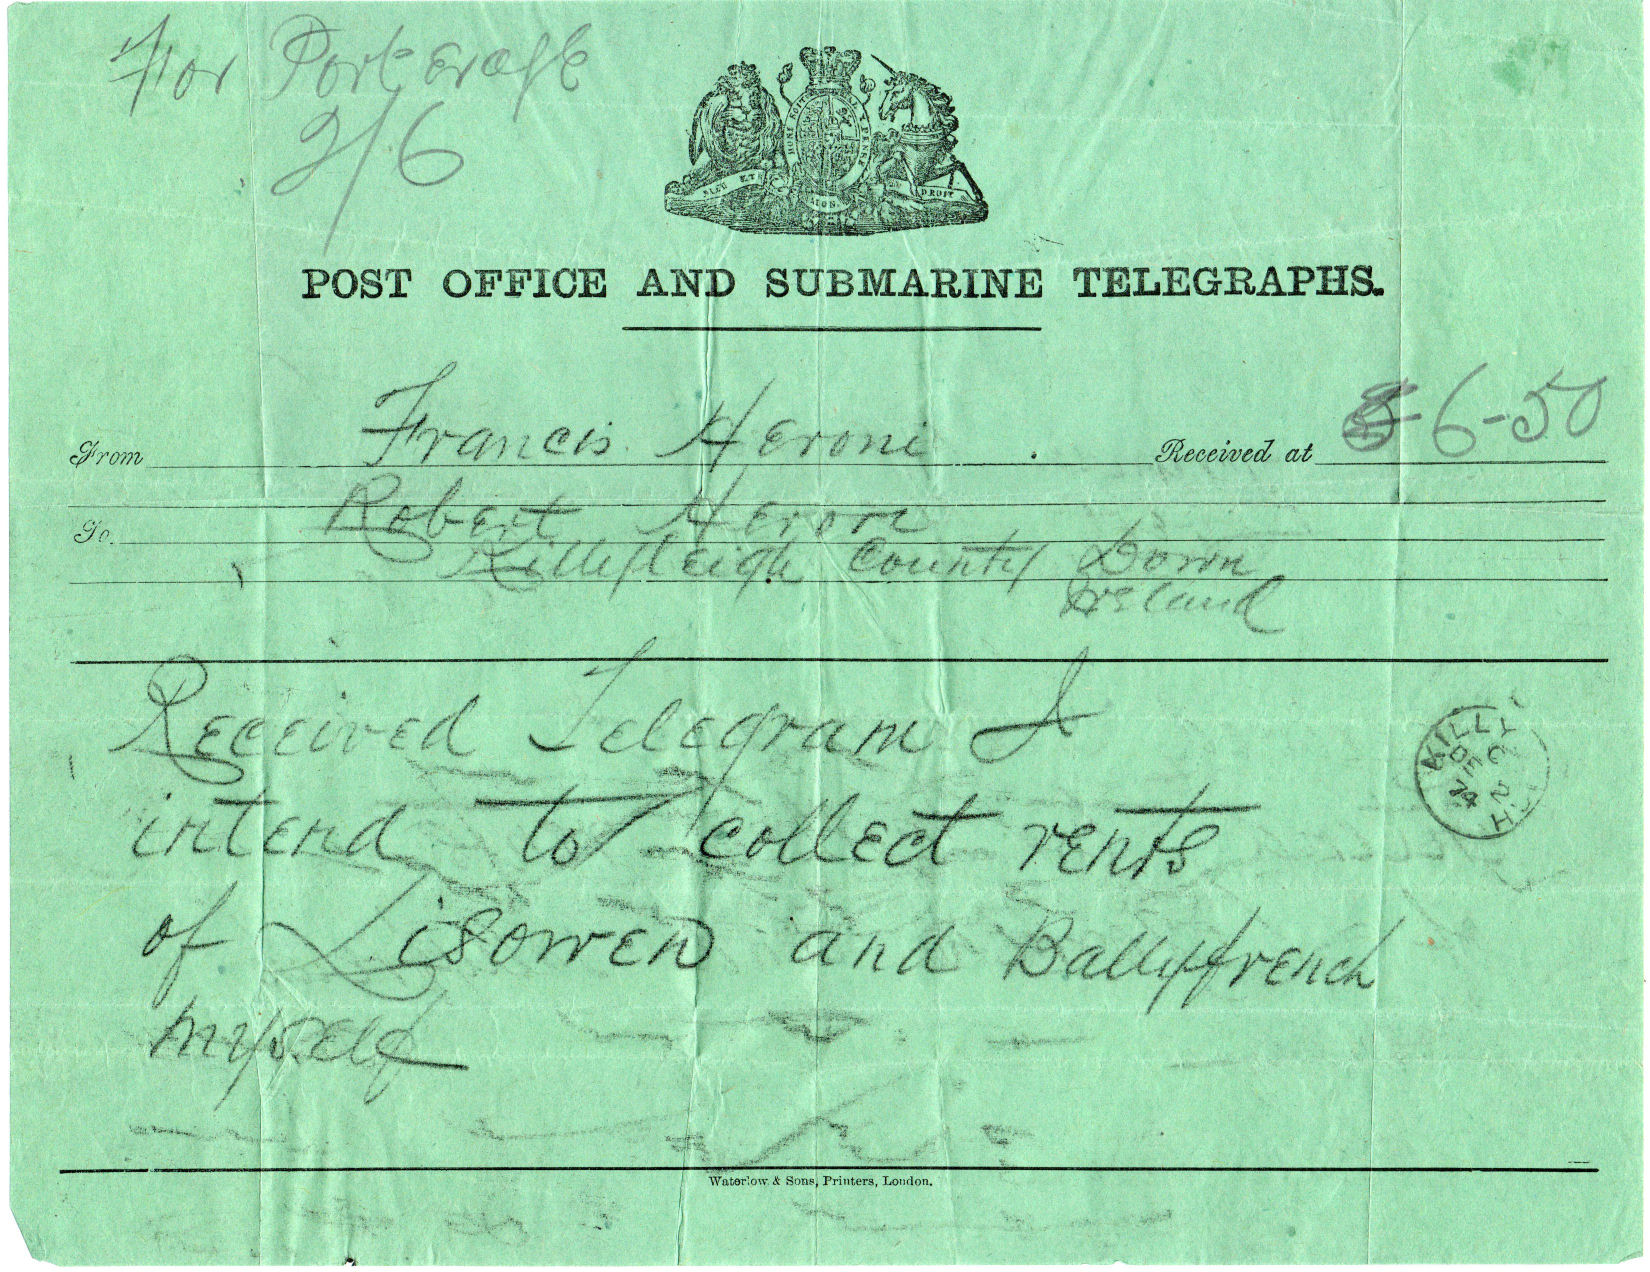 PO & Submarine Telegraph Co. 1874 form